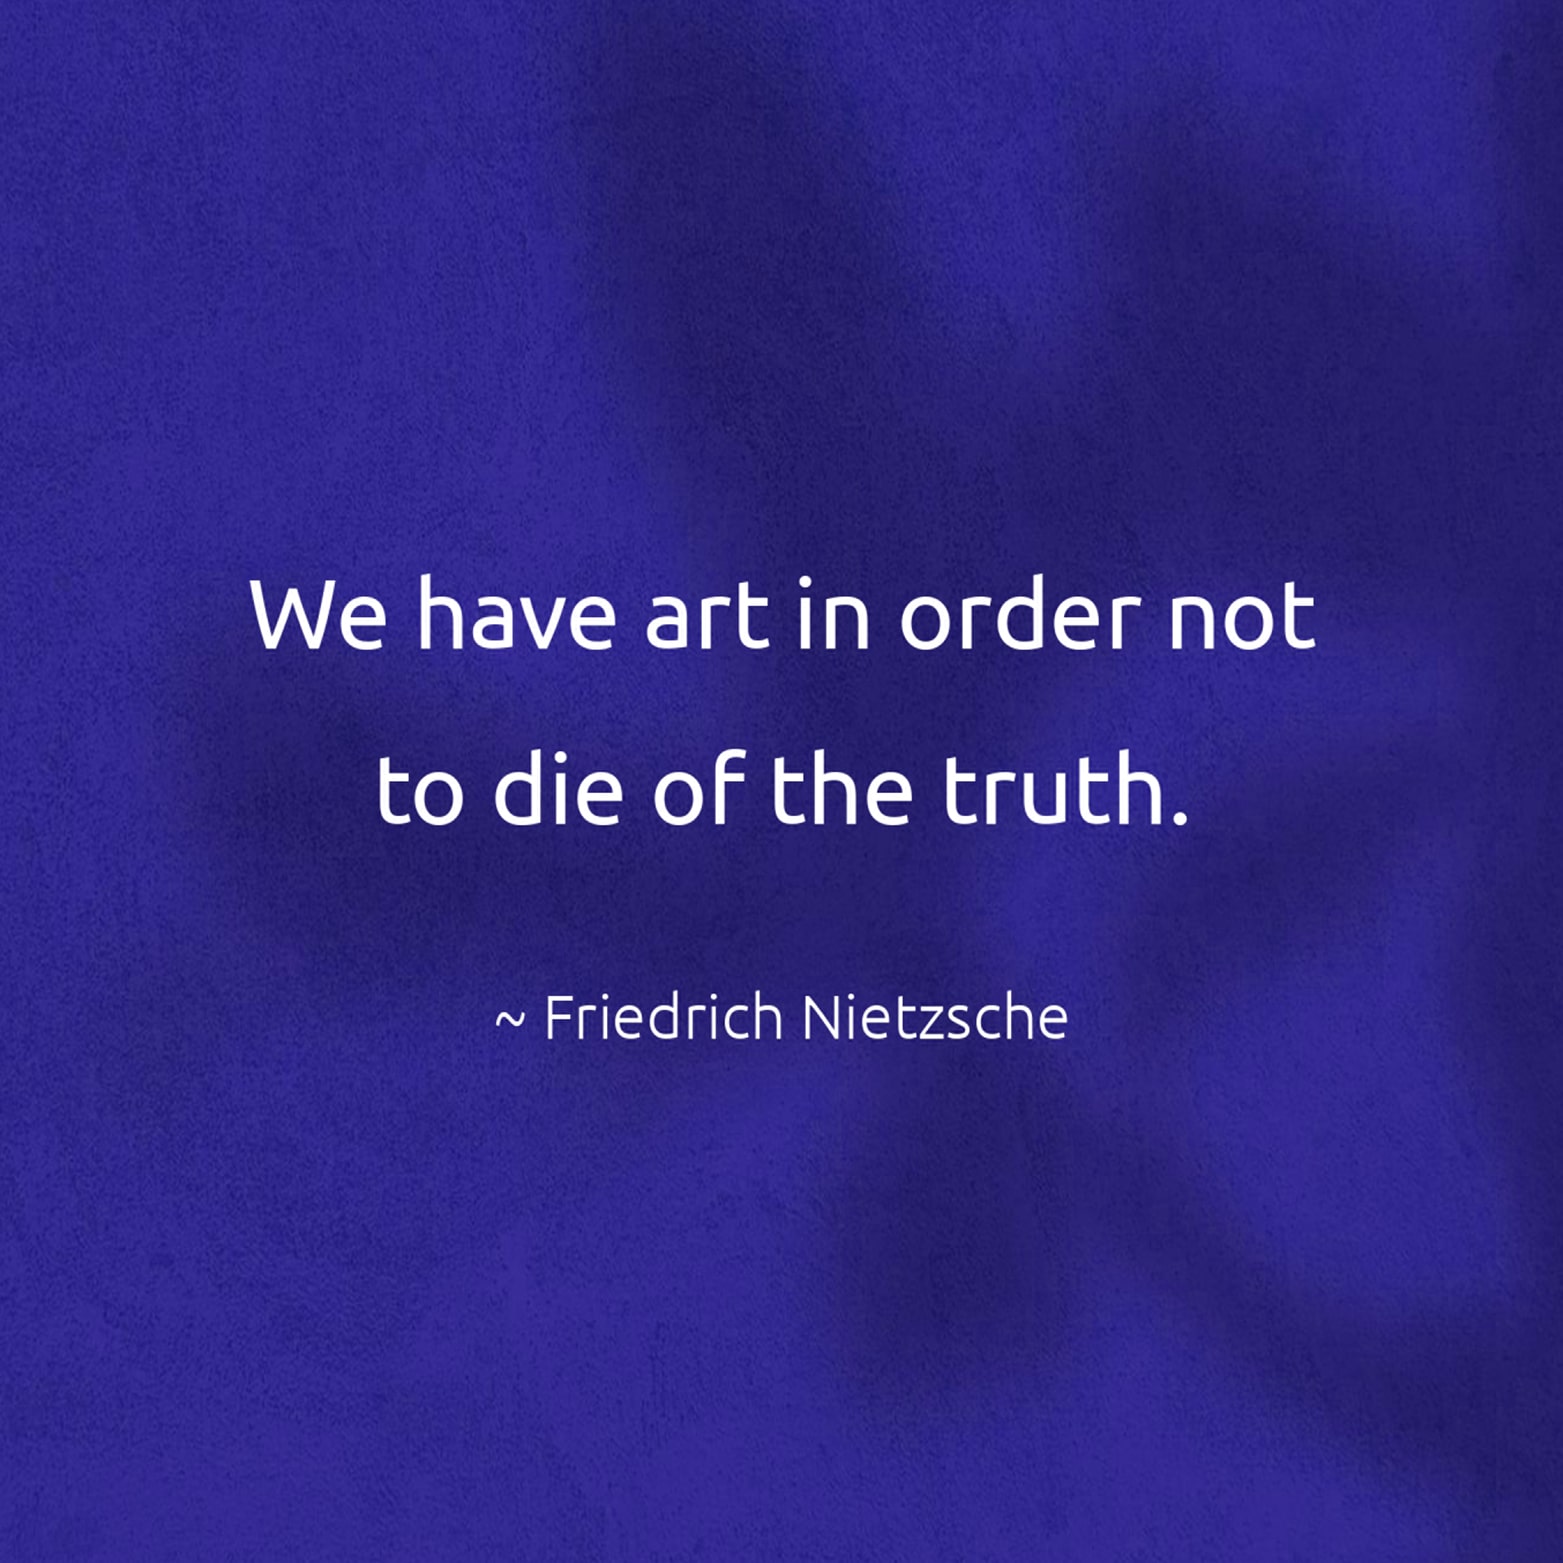 We have art in order not to die of the truth. - Friedrich Nietzsche